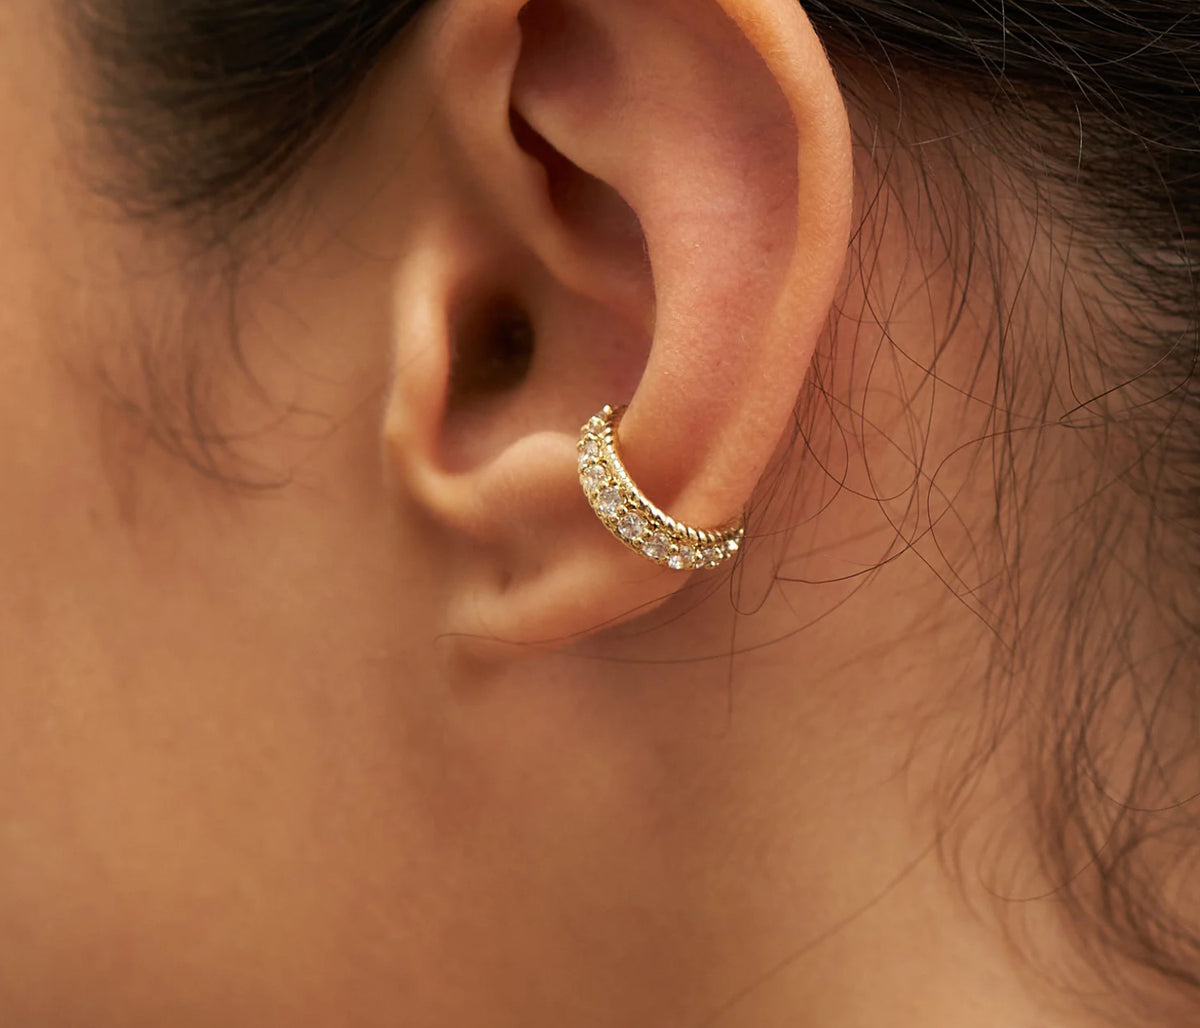 Brenda Grands Jewelry Shiny Ear Cuff